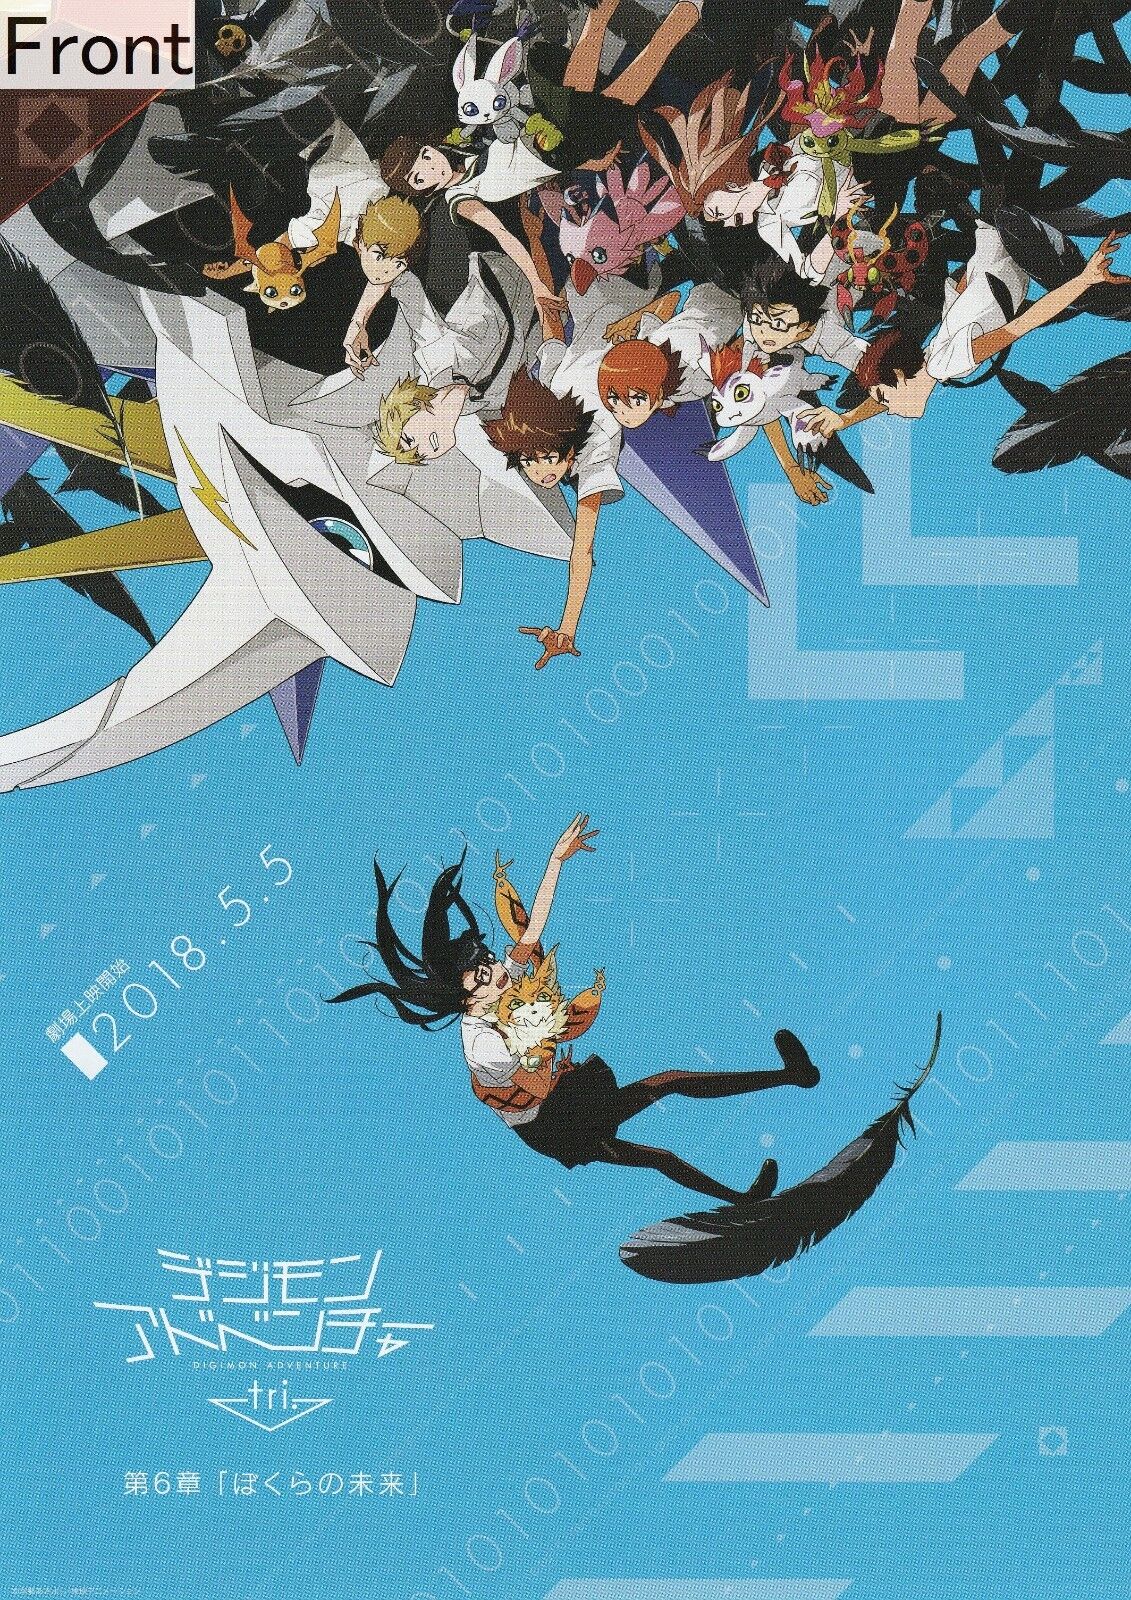 Digimon Adventure tri. 6 -Future- Promotional Poster